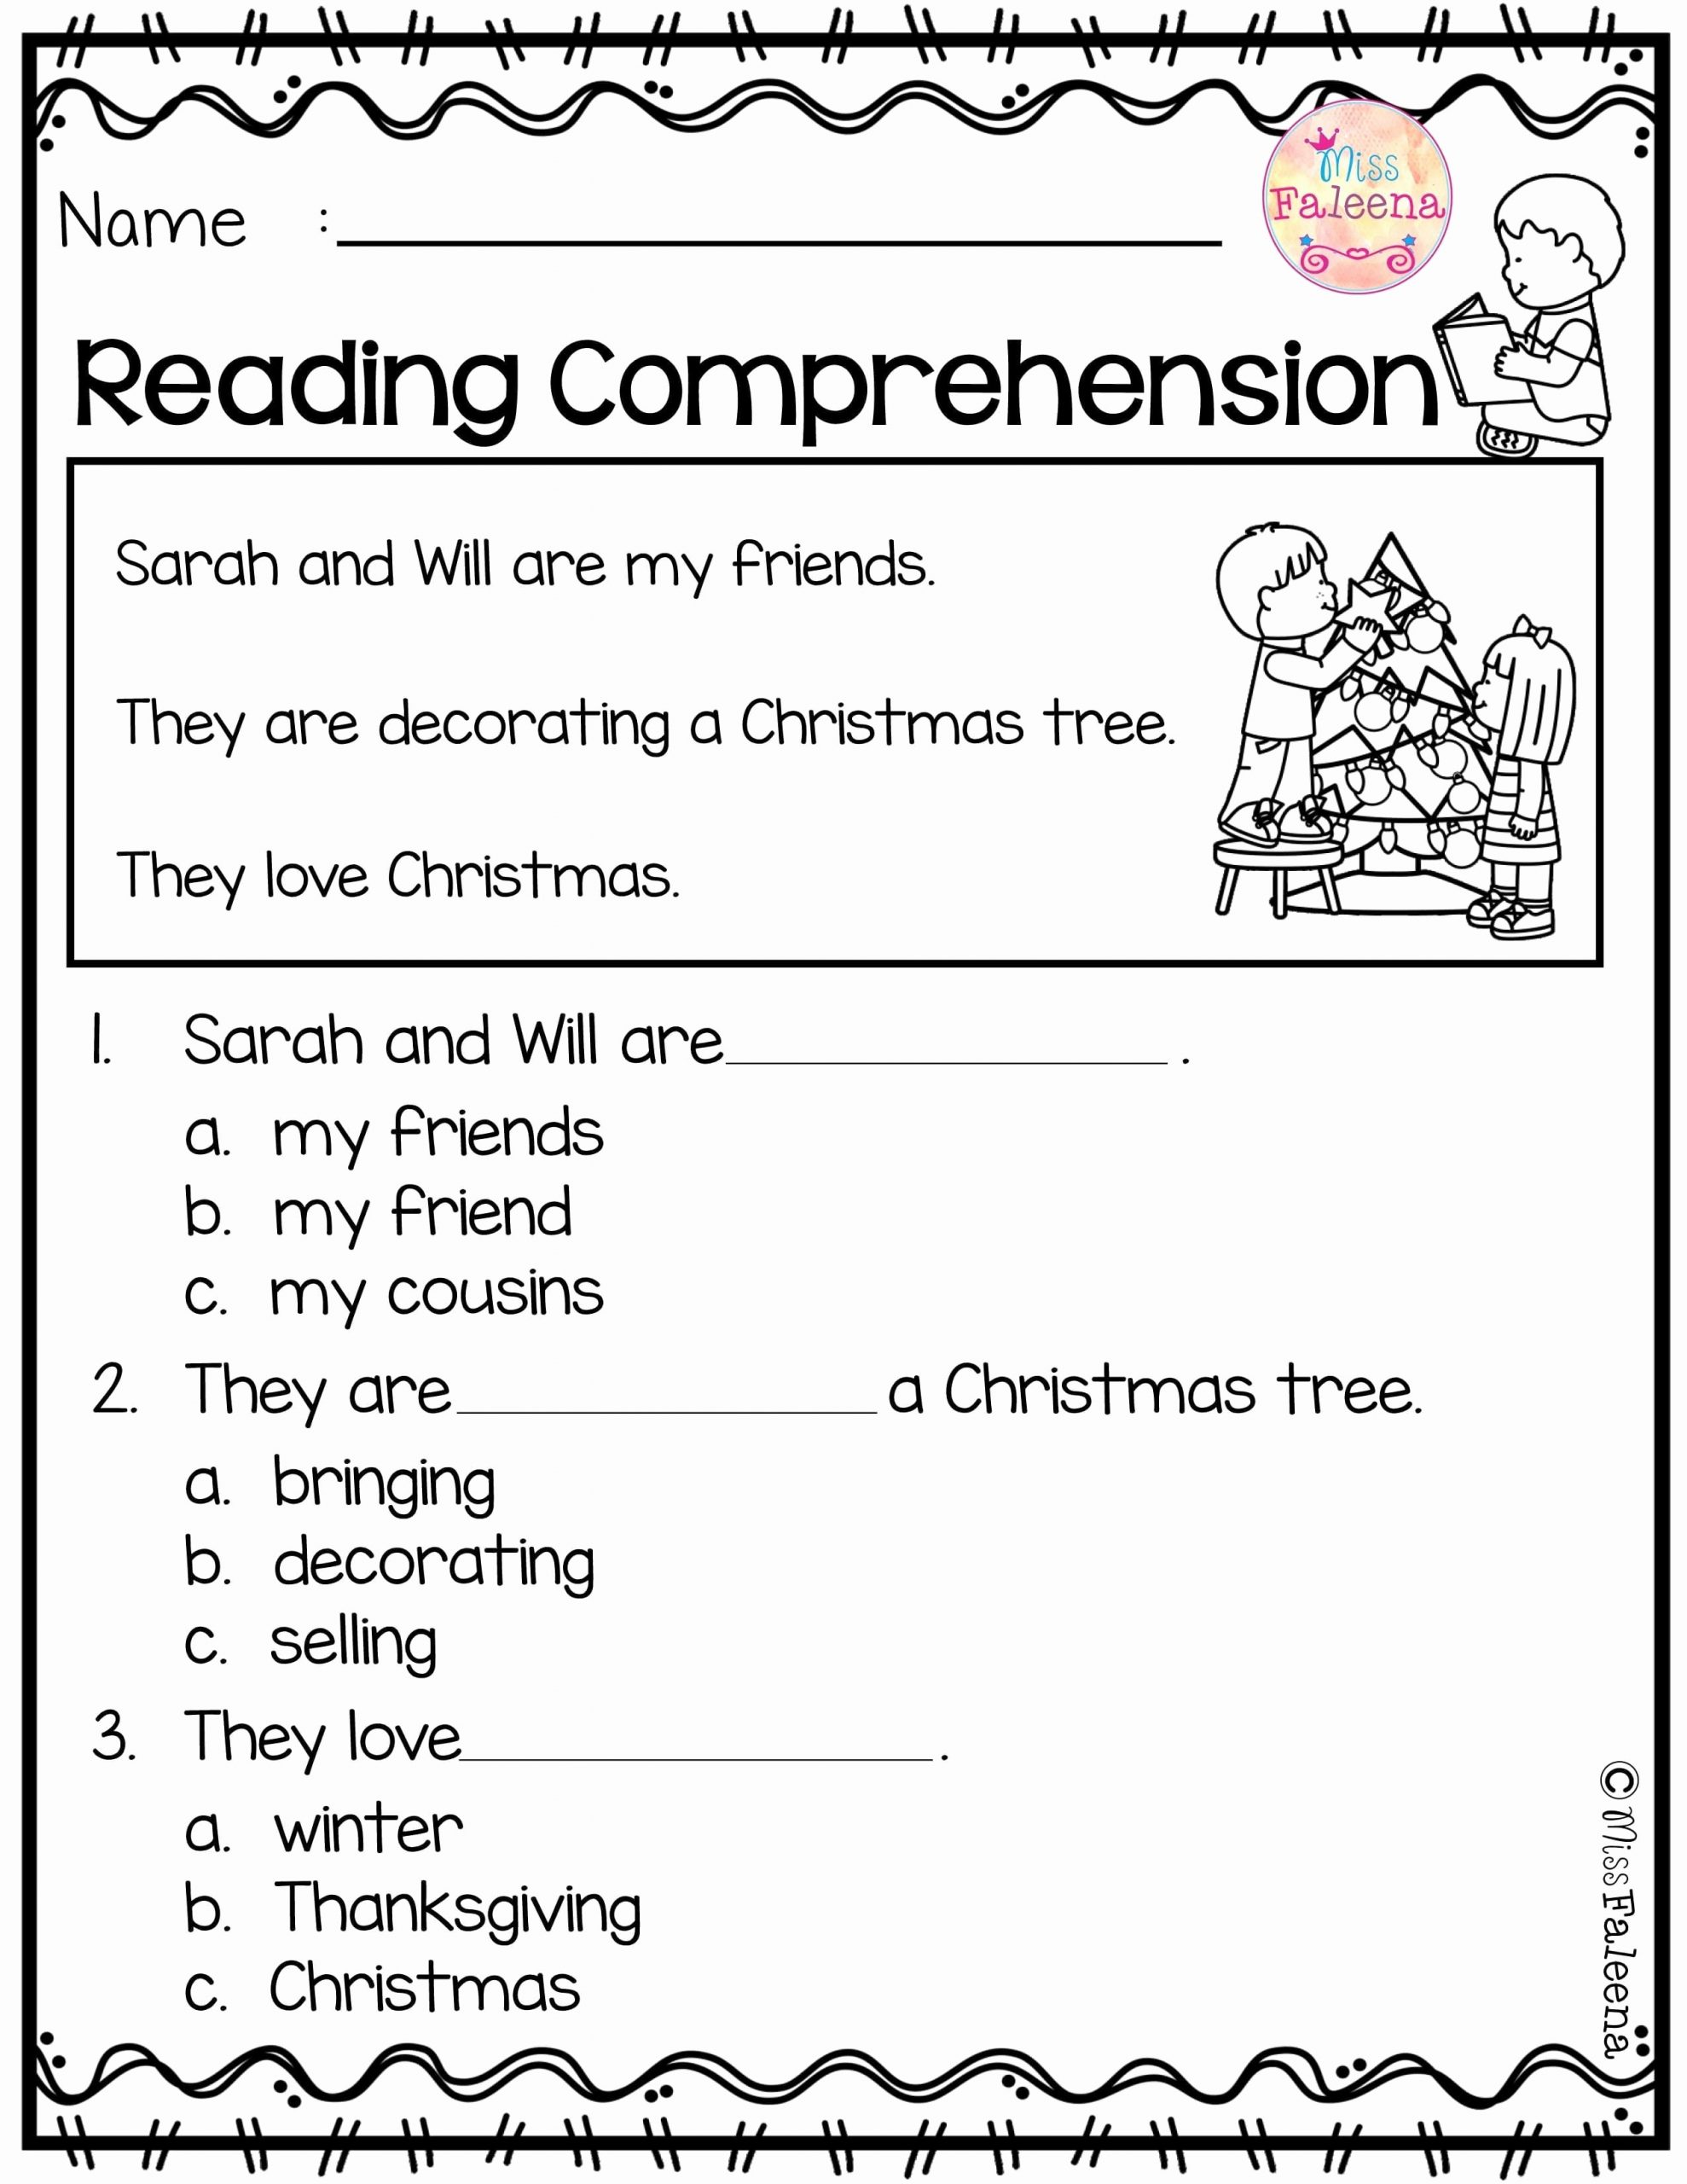 Preschool Reading Comprehension Worksheets Luxury Simple Prehension Worksheets for Kindergarten — Db